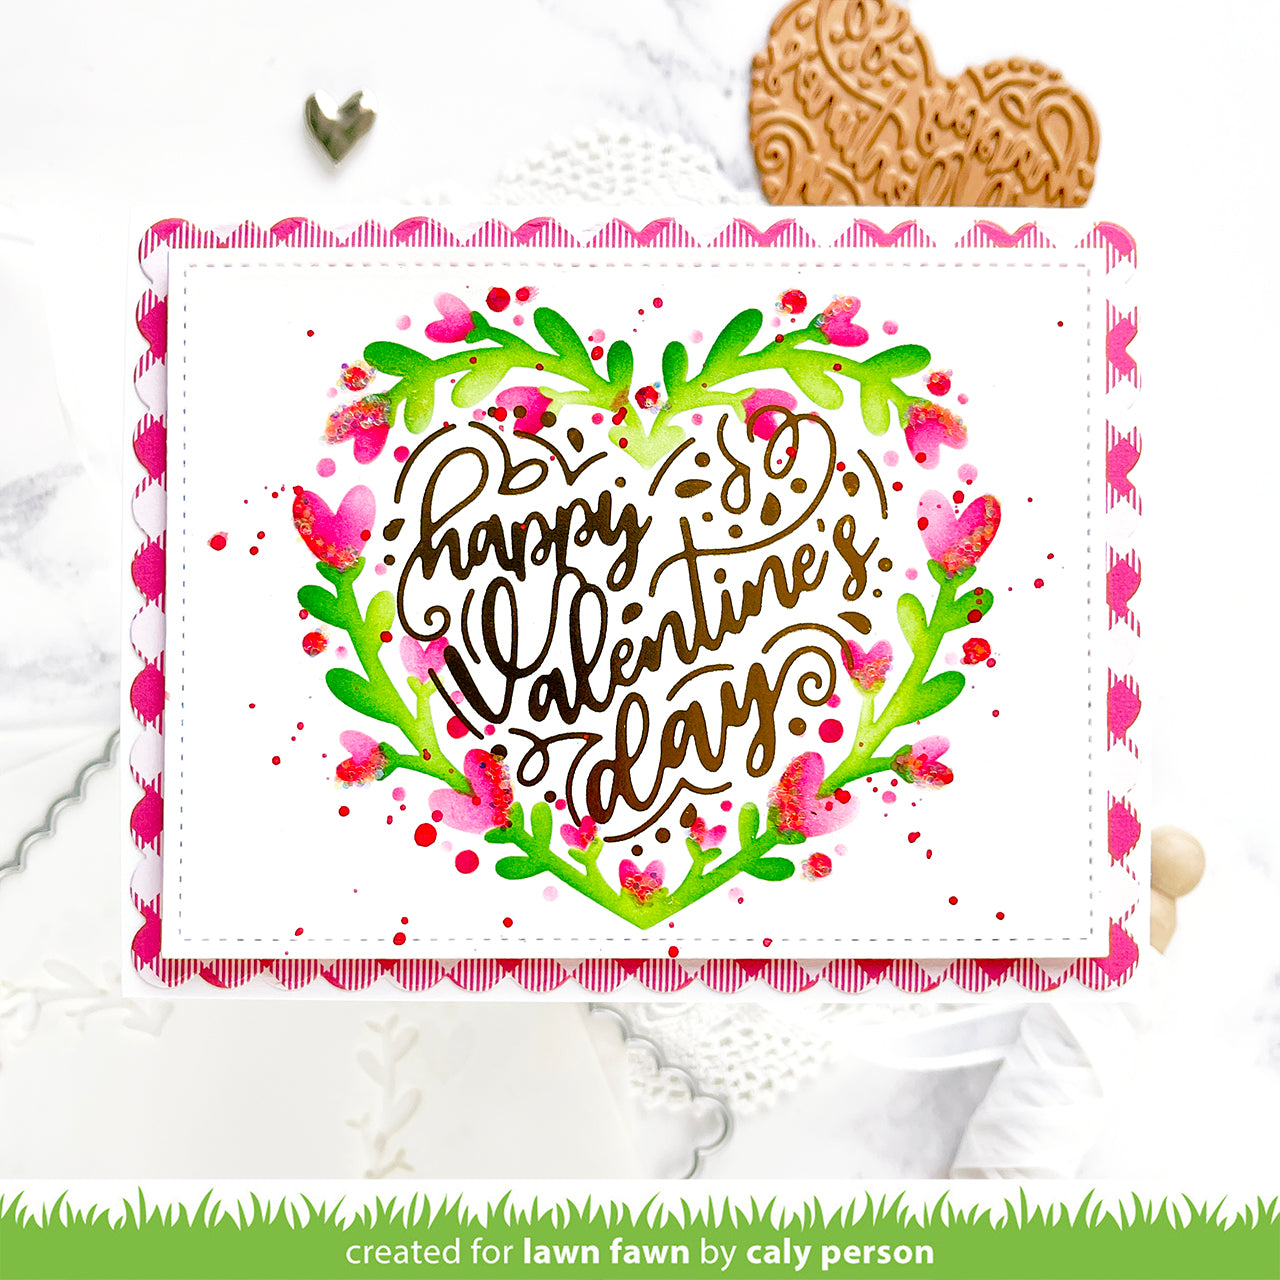 Valentines Wreath, Heart Wreath, Valentines Decor, Happy